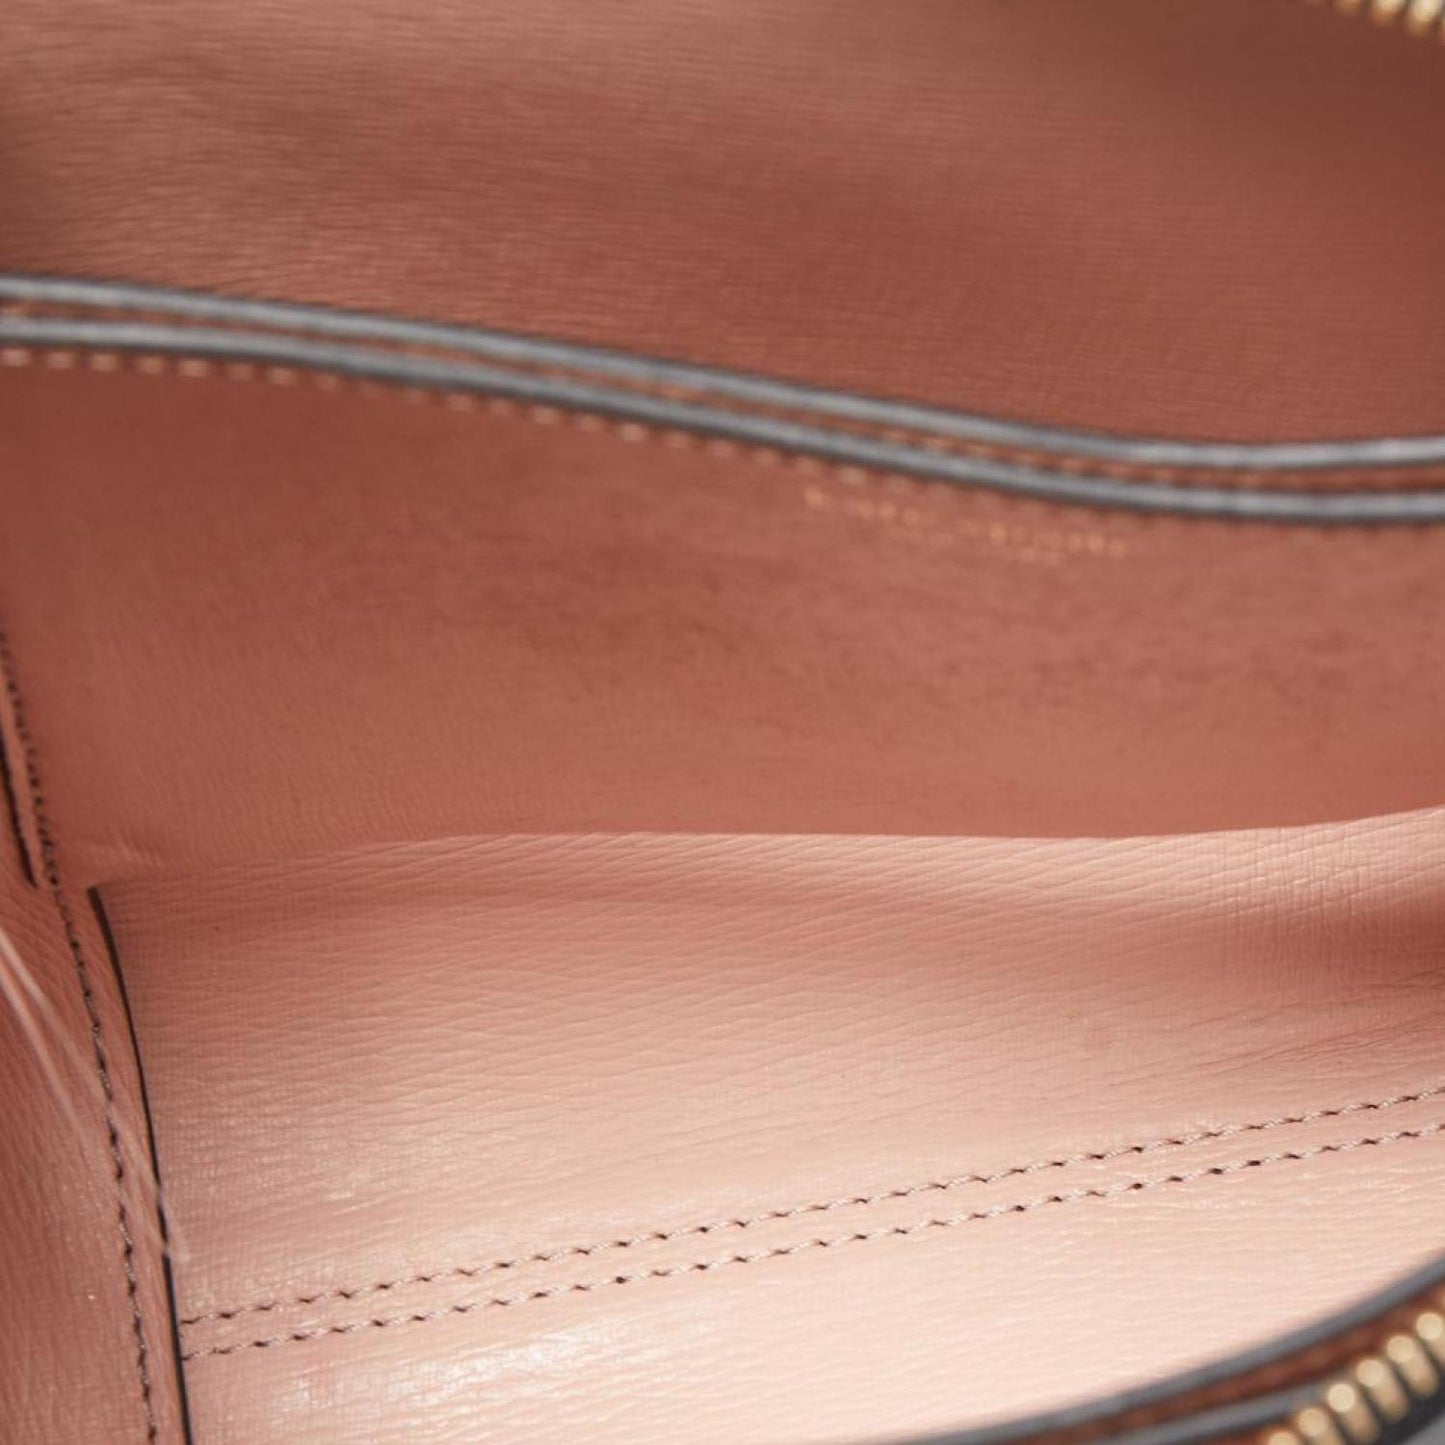 Kate Spade  Leather Andi Crossbody Bag